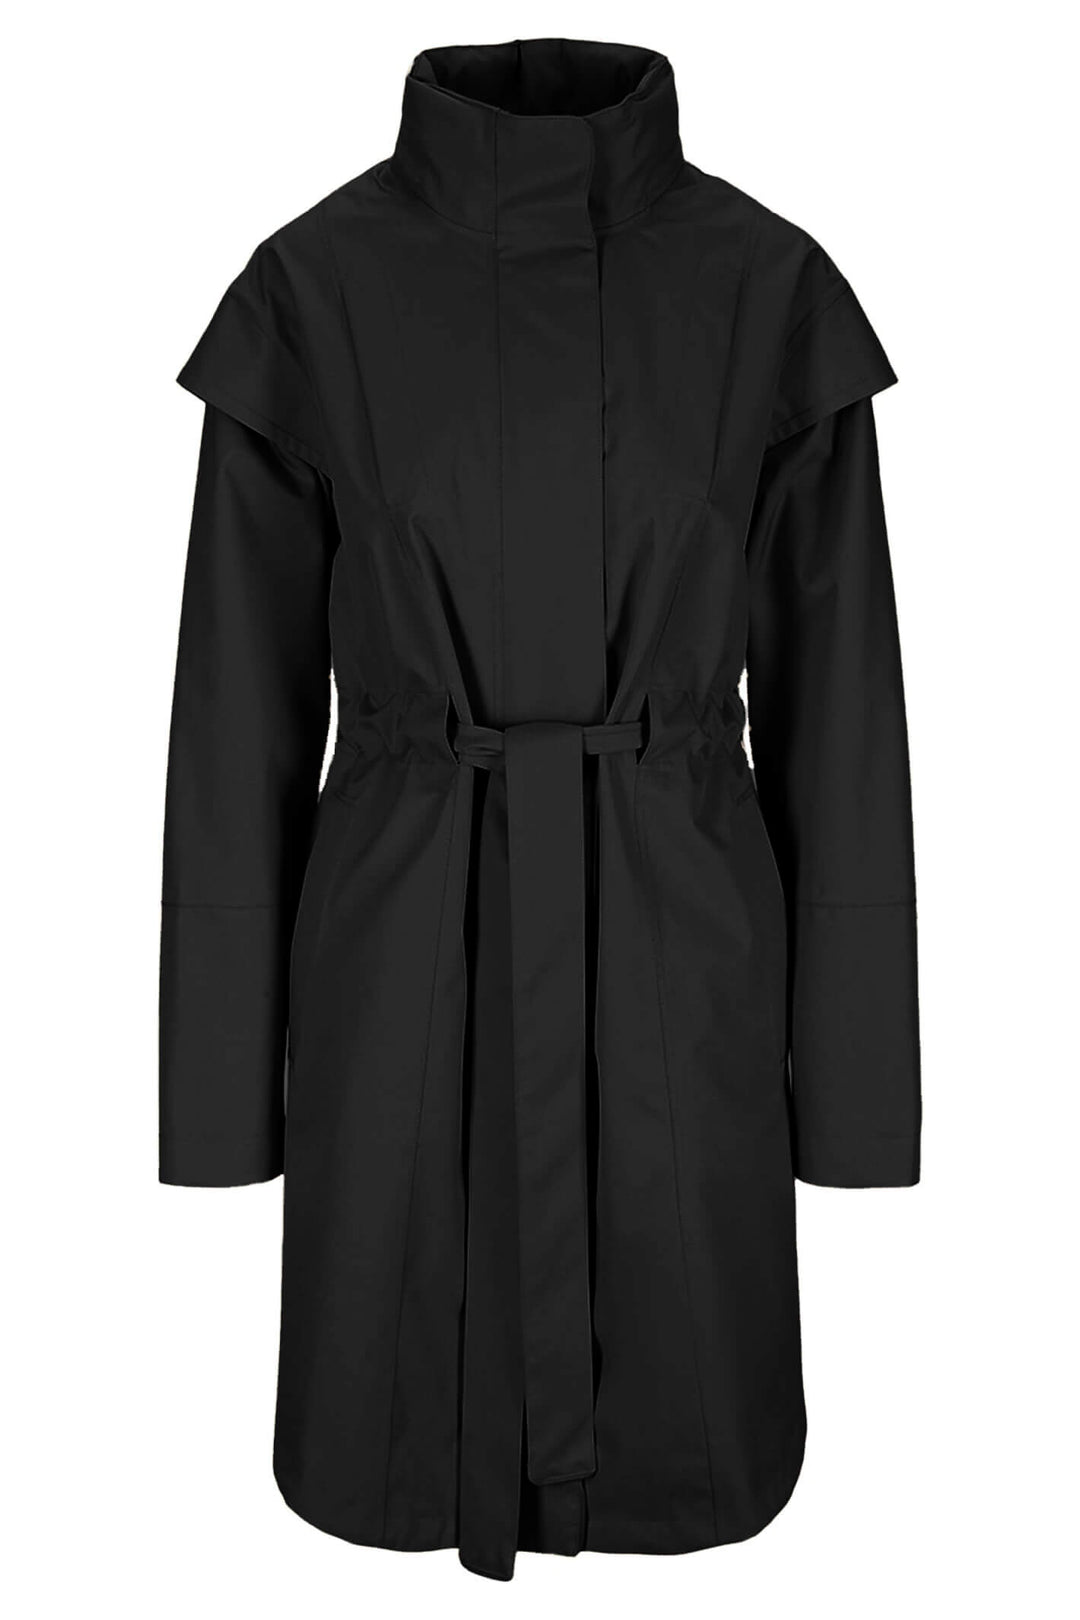 BRGN 15032T2 095 New Black Monsun Wateproof Coat - Olivia Grace Fashion